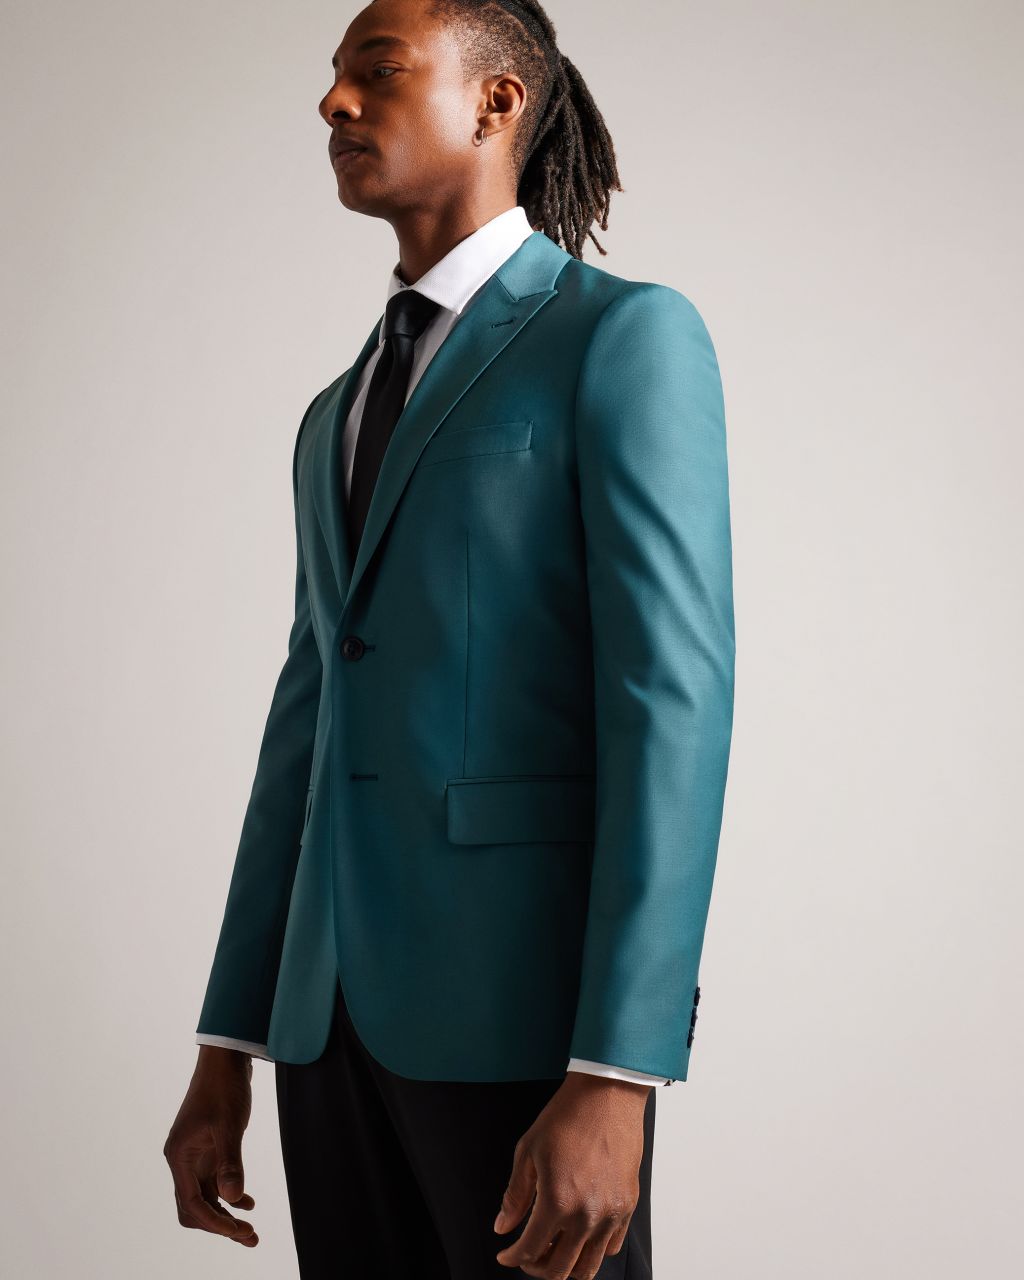 men's wool blend blazer in green, hynish